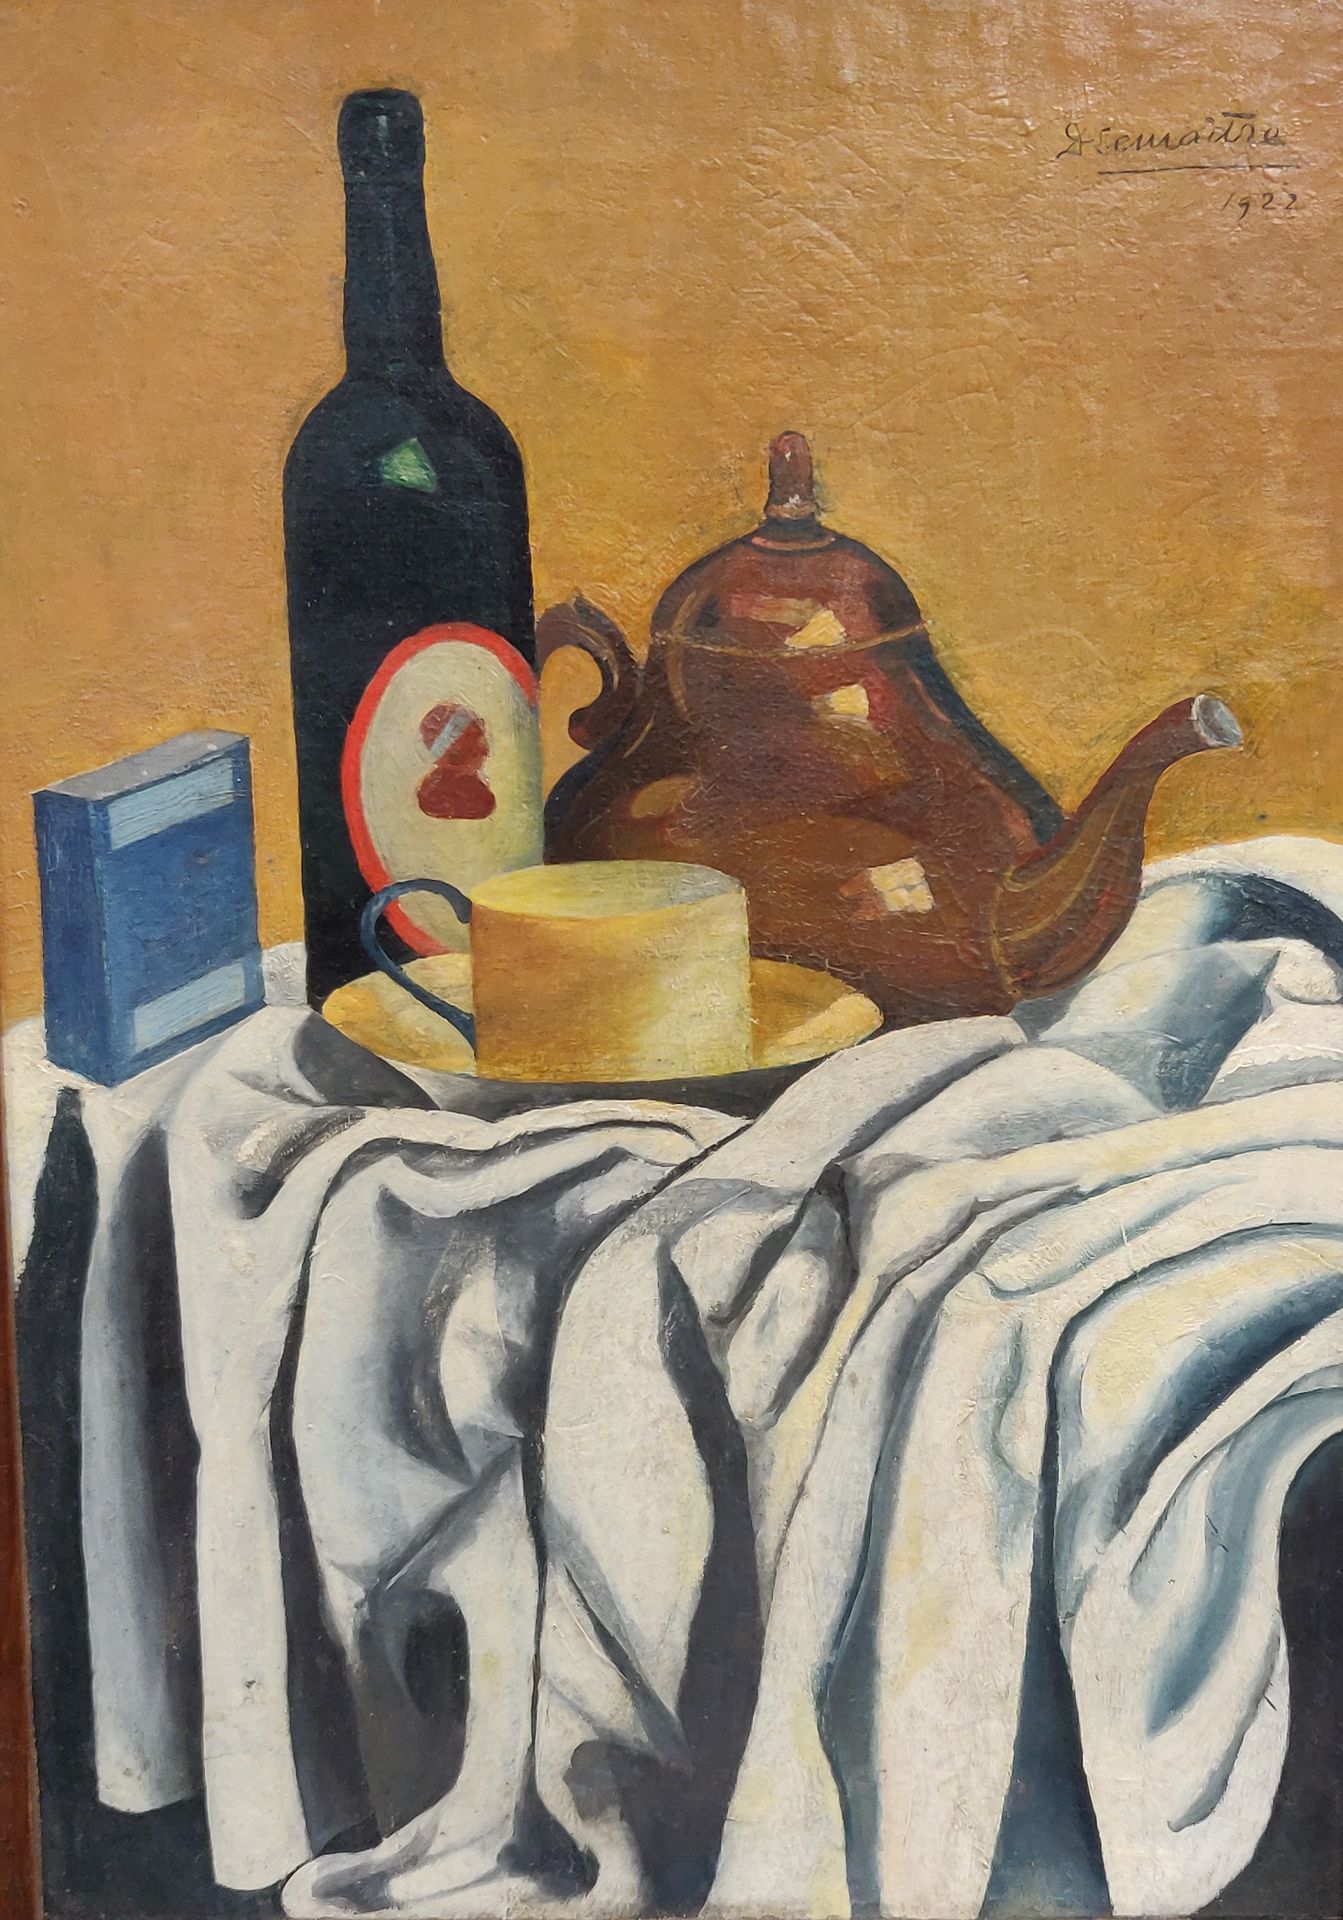 Null A.LEMAITRE（第二十次）。一瓶酒和一个茶壶的静物。布面油画，右上角有签名，62 x 56厘米。小事故。